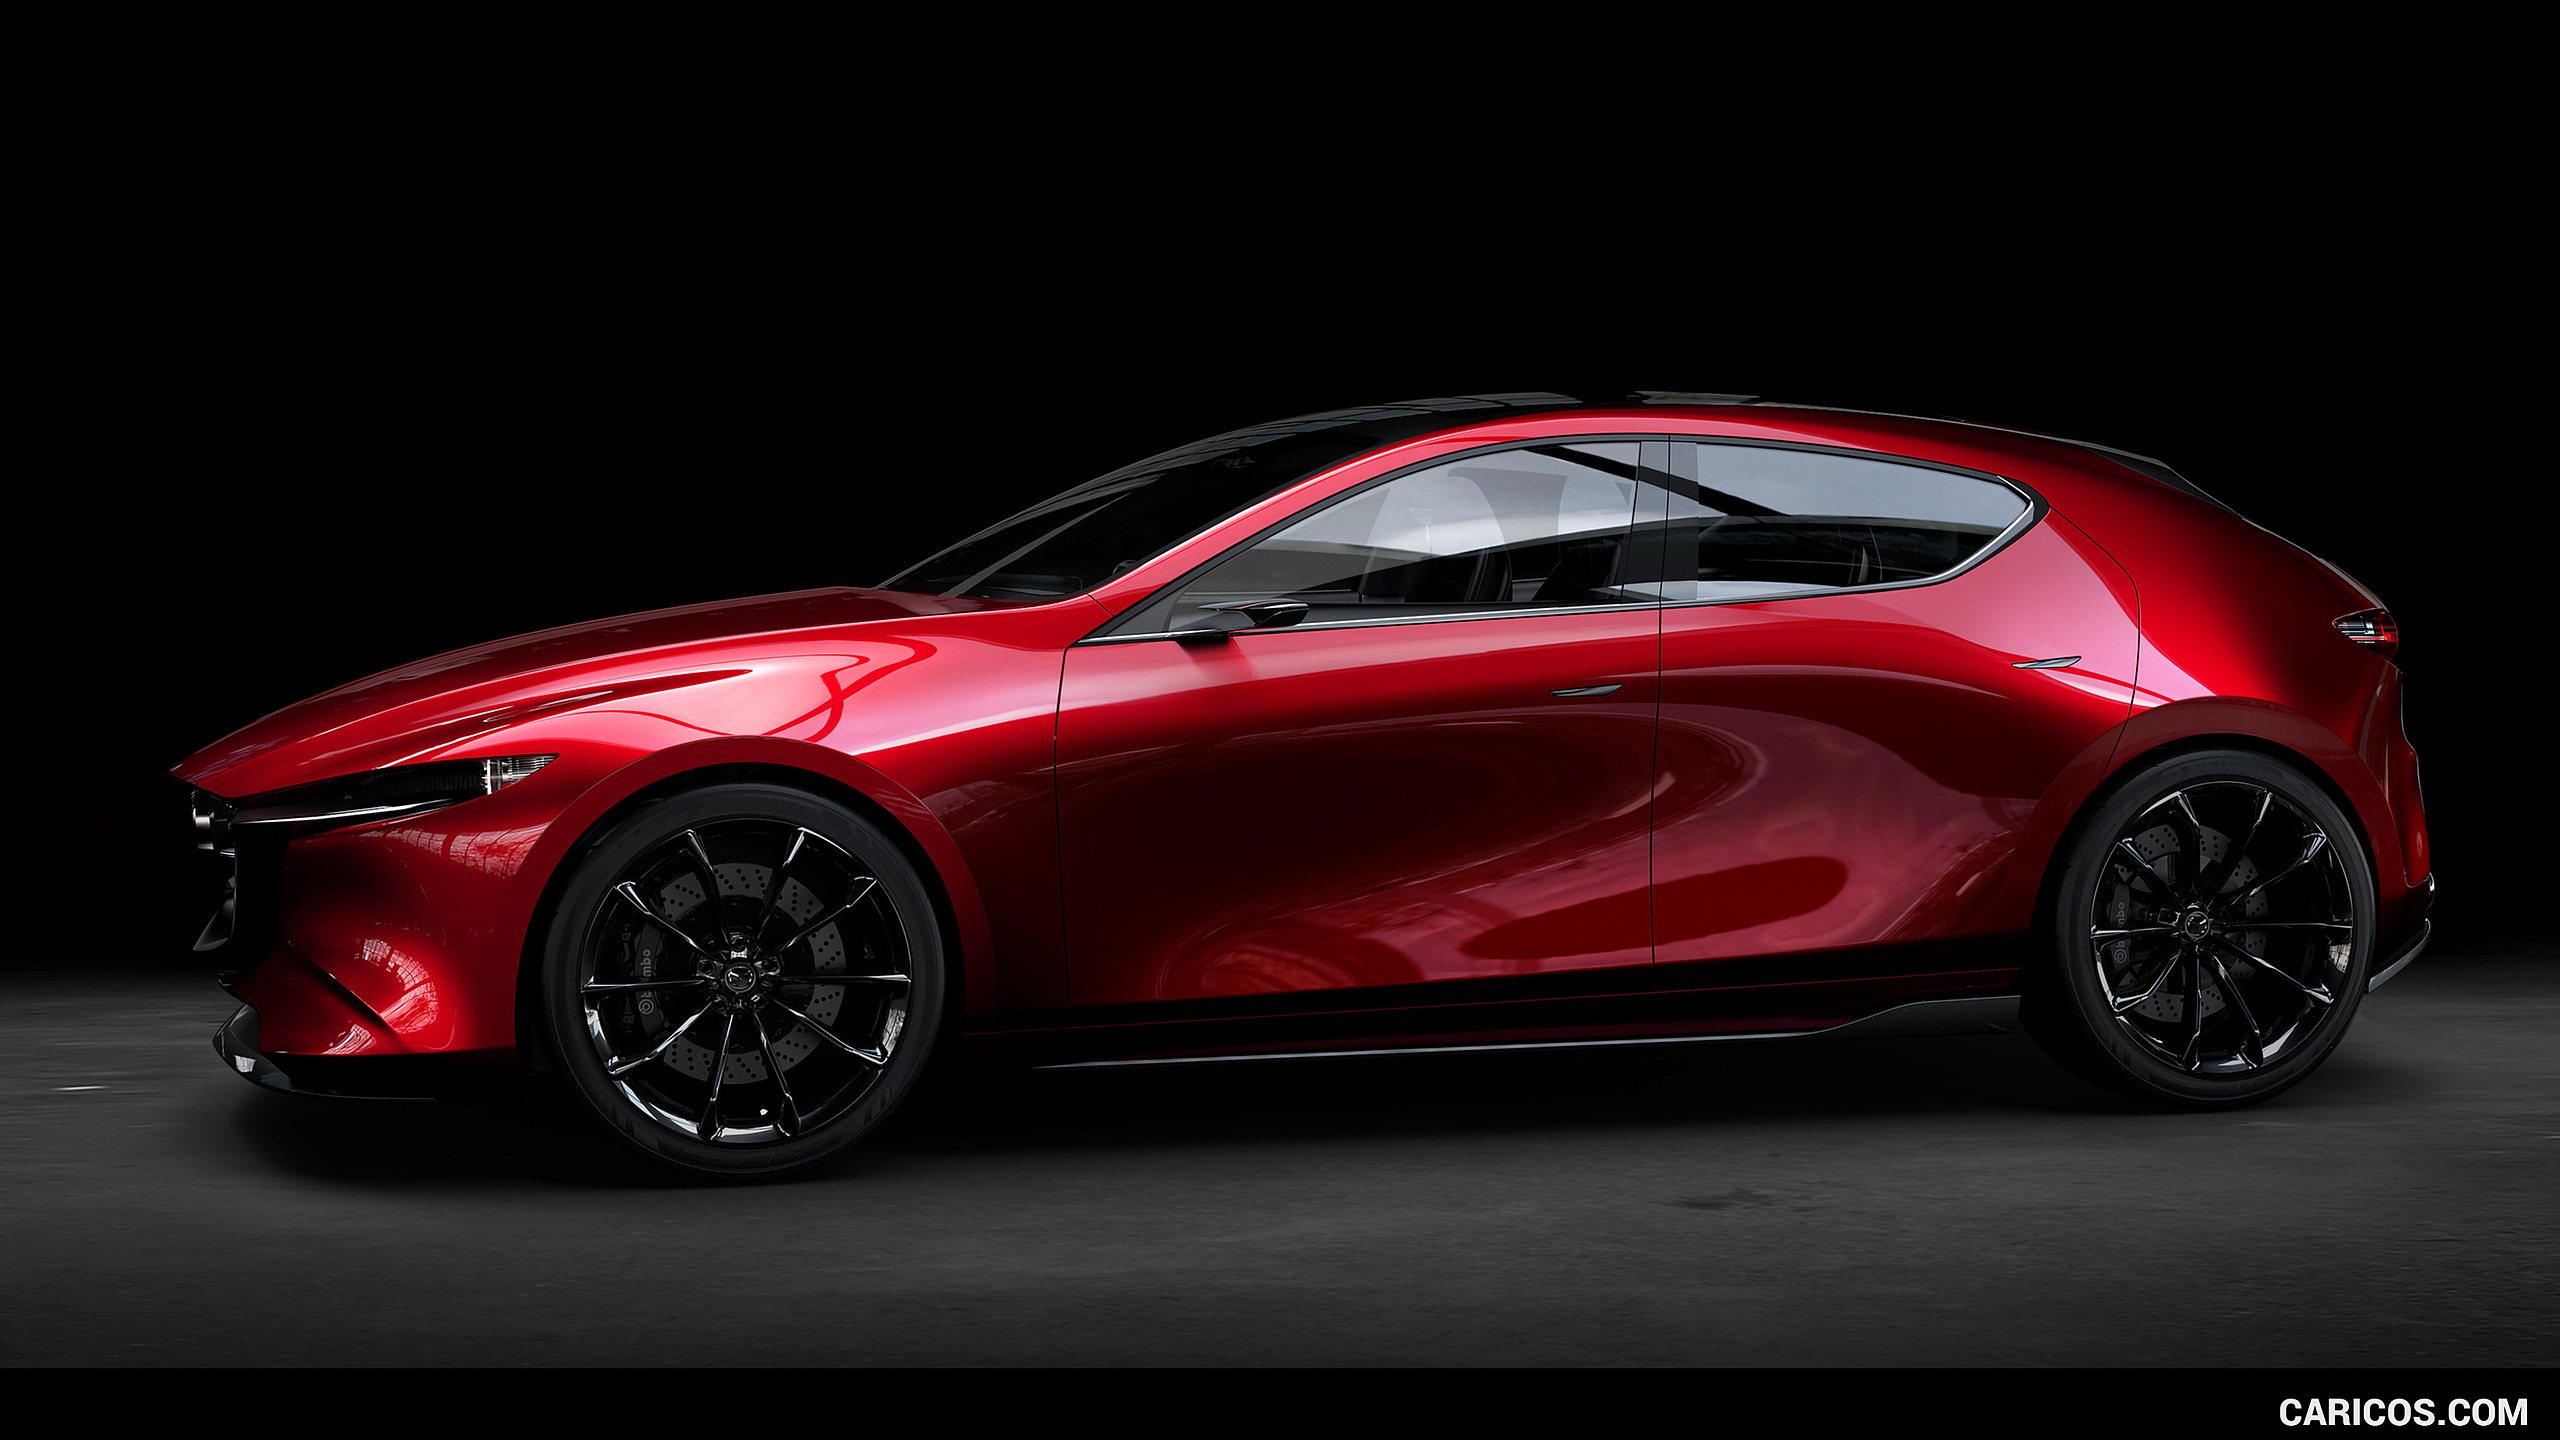 2017 Mazda KAI Concept - Side, #4 of 13